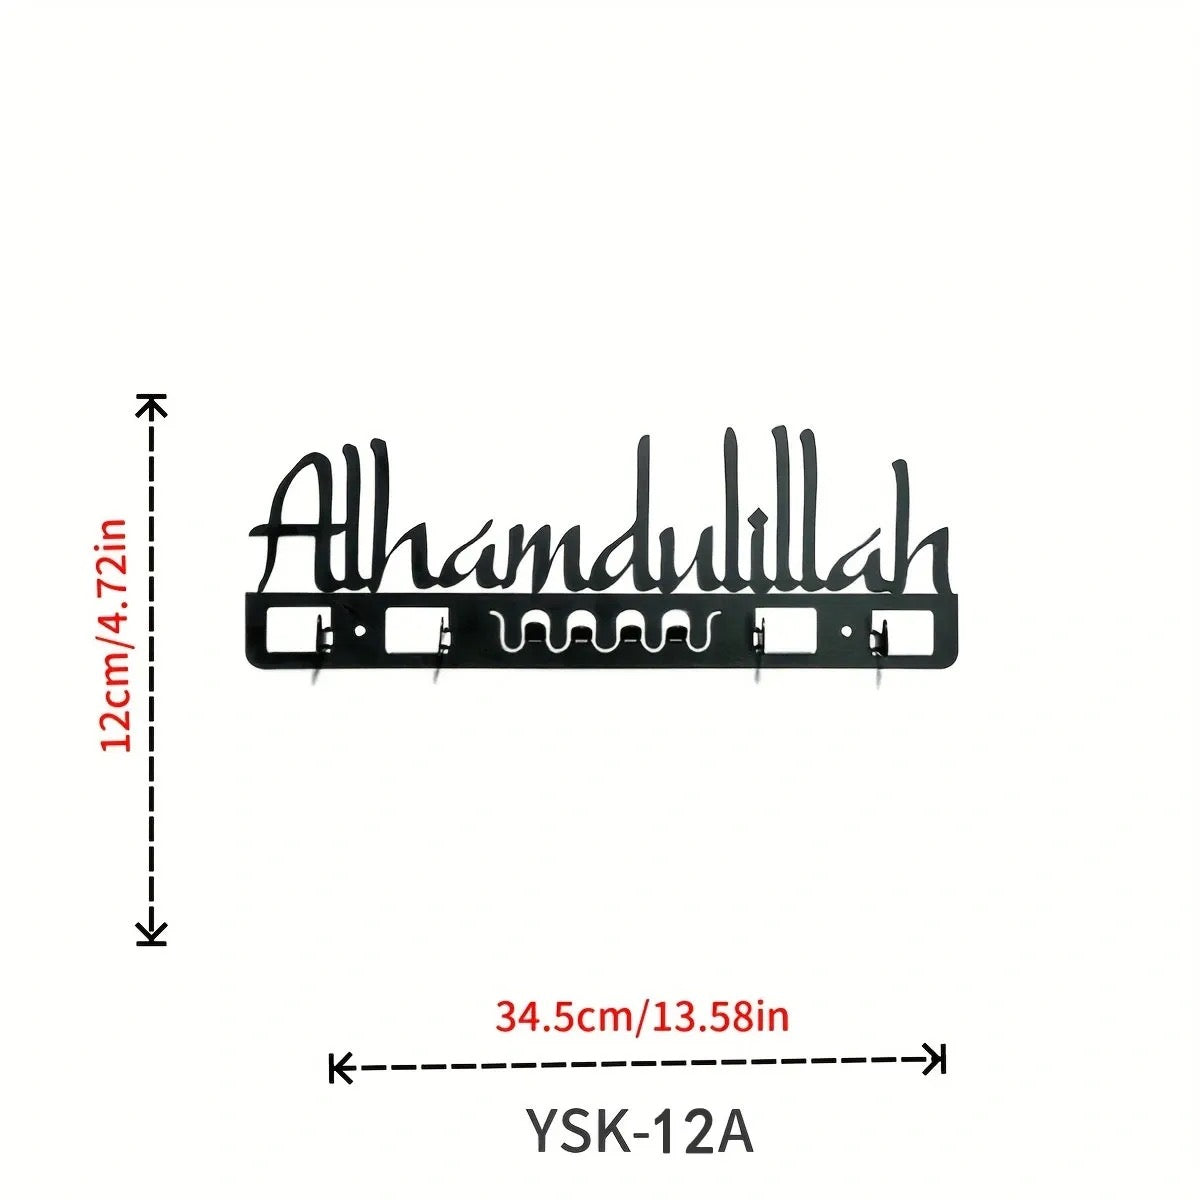 Alhamdulillah key holder measurement